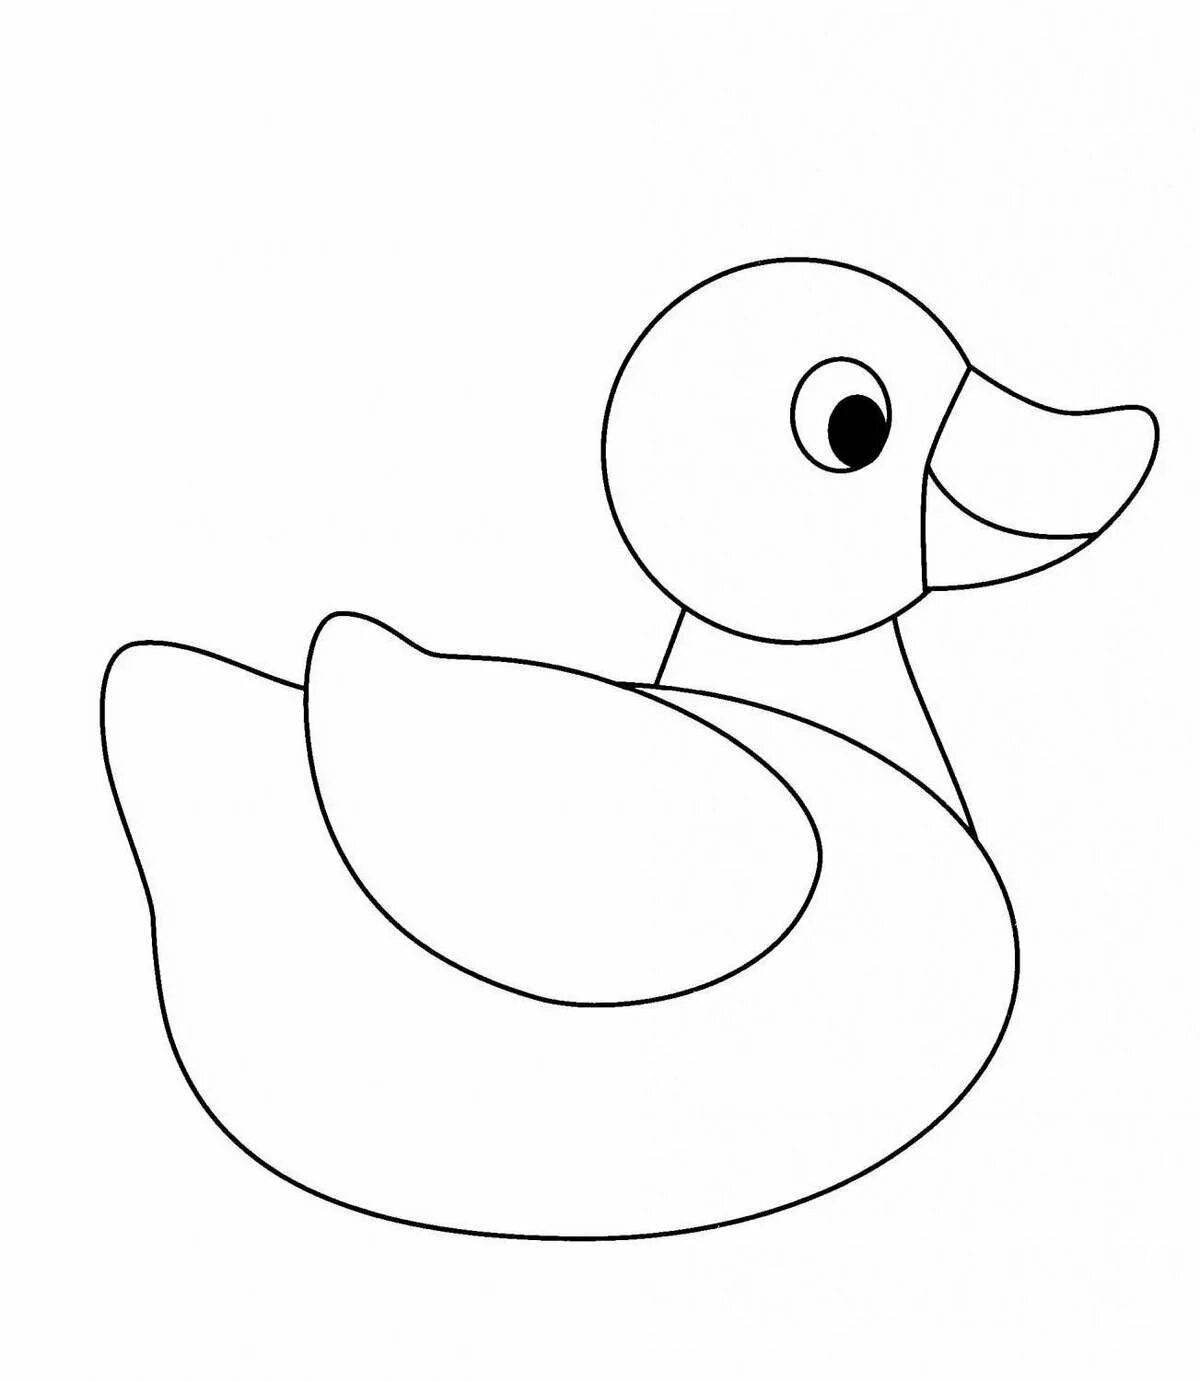 Color-explosion lolofan duck coloring page